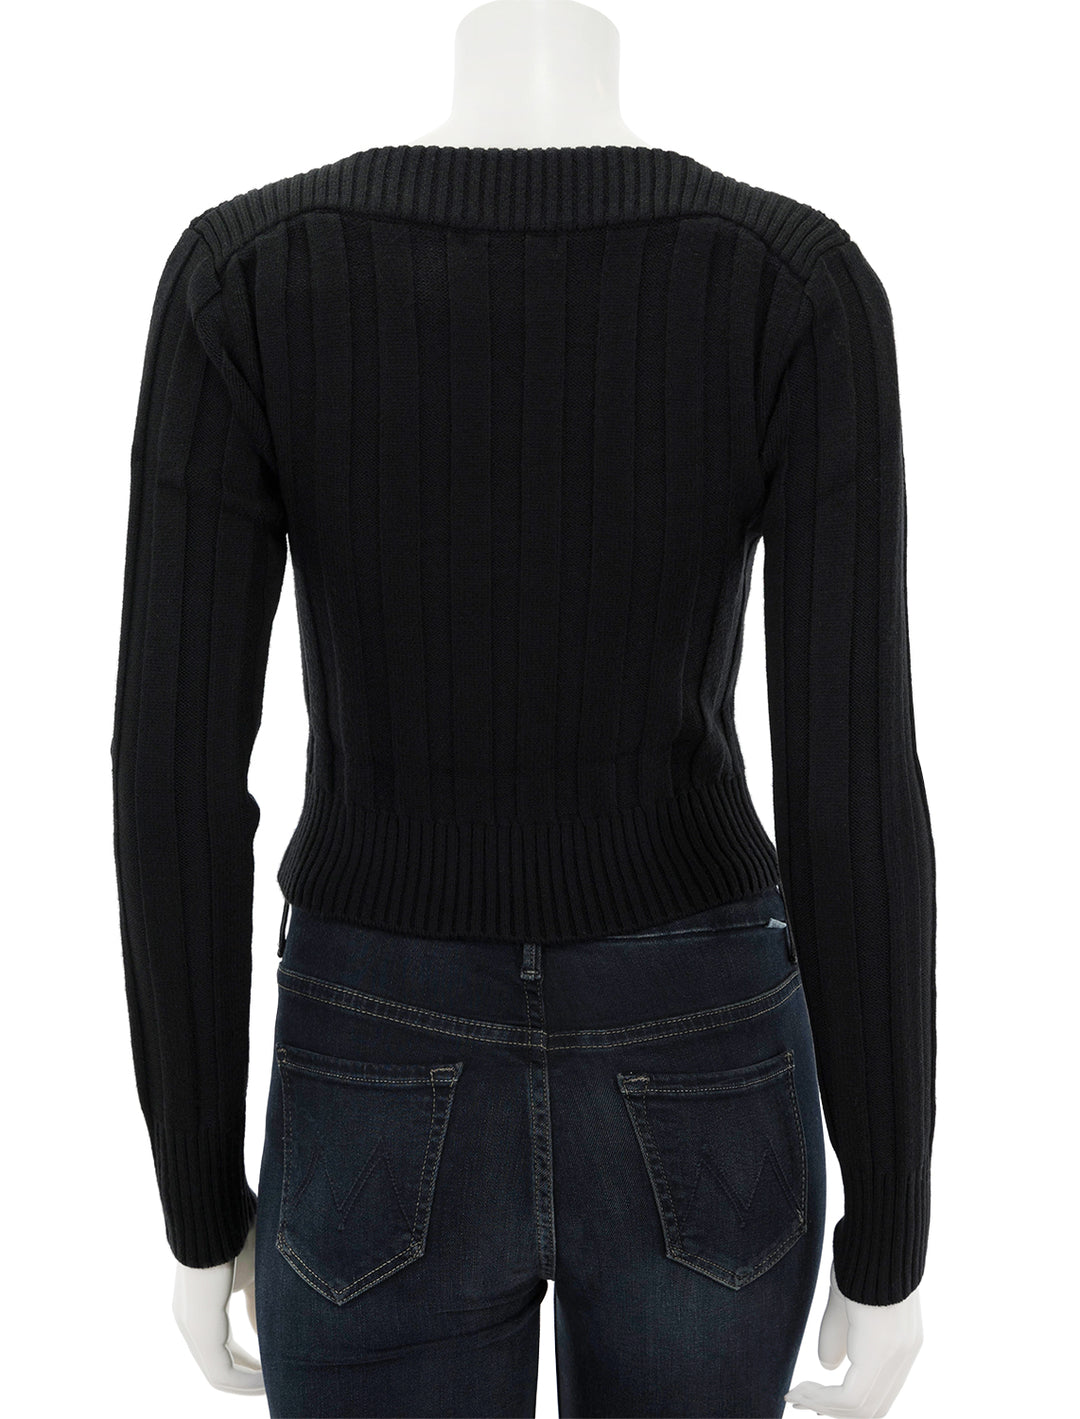 Back view of Steve Madden's serra sweater in black.